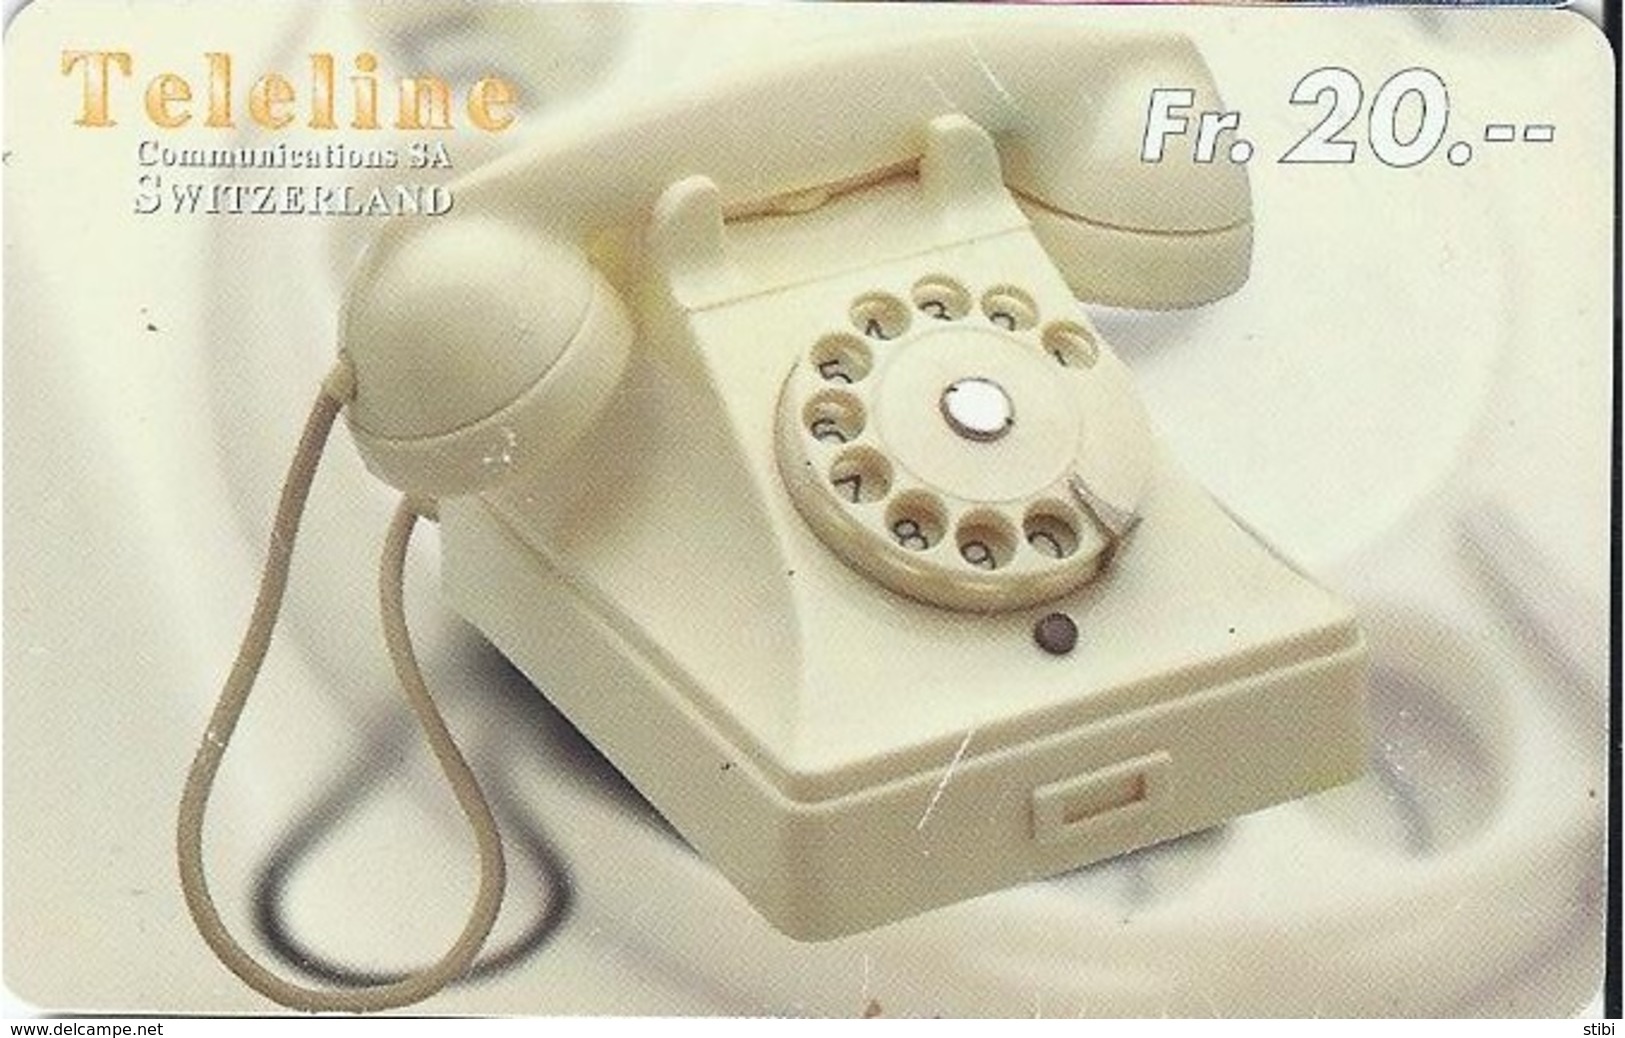 SWITZERLAND - TELELINE - TELEPHONE 4 - Suriname